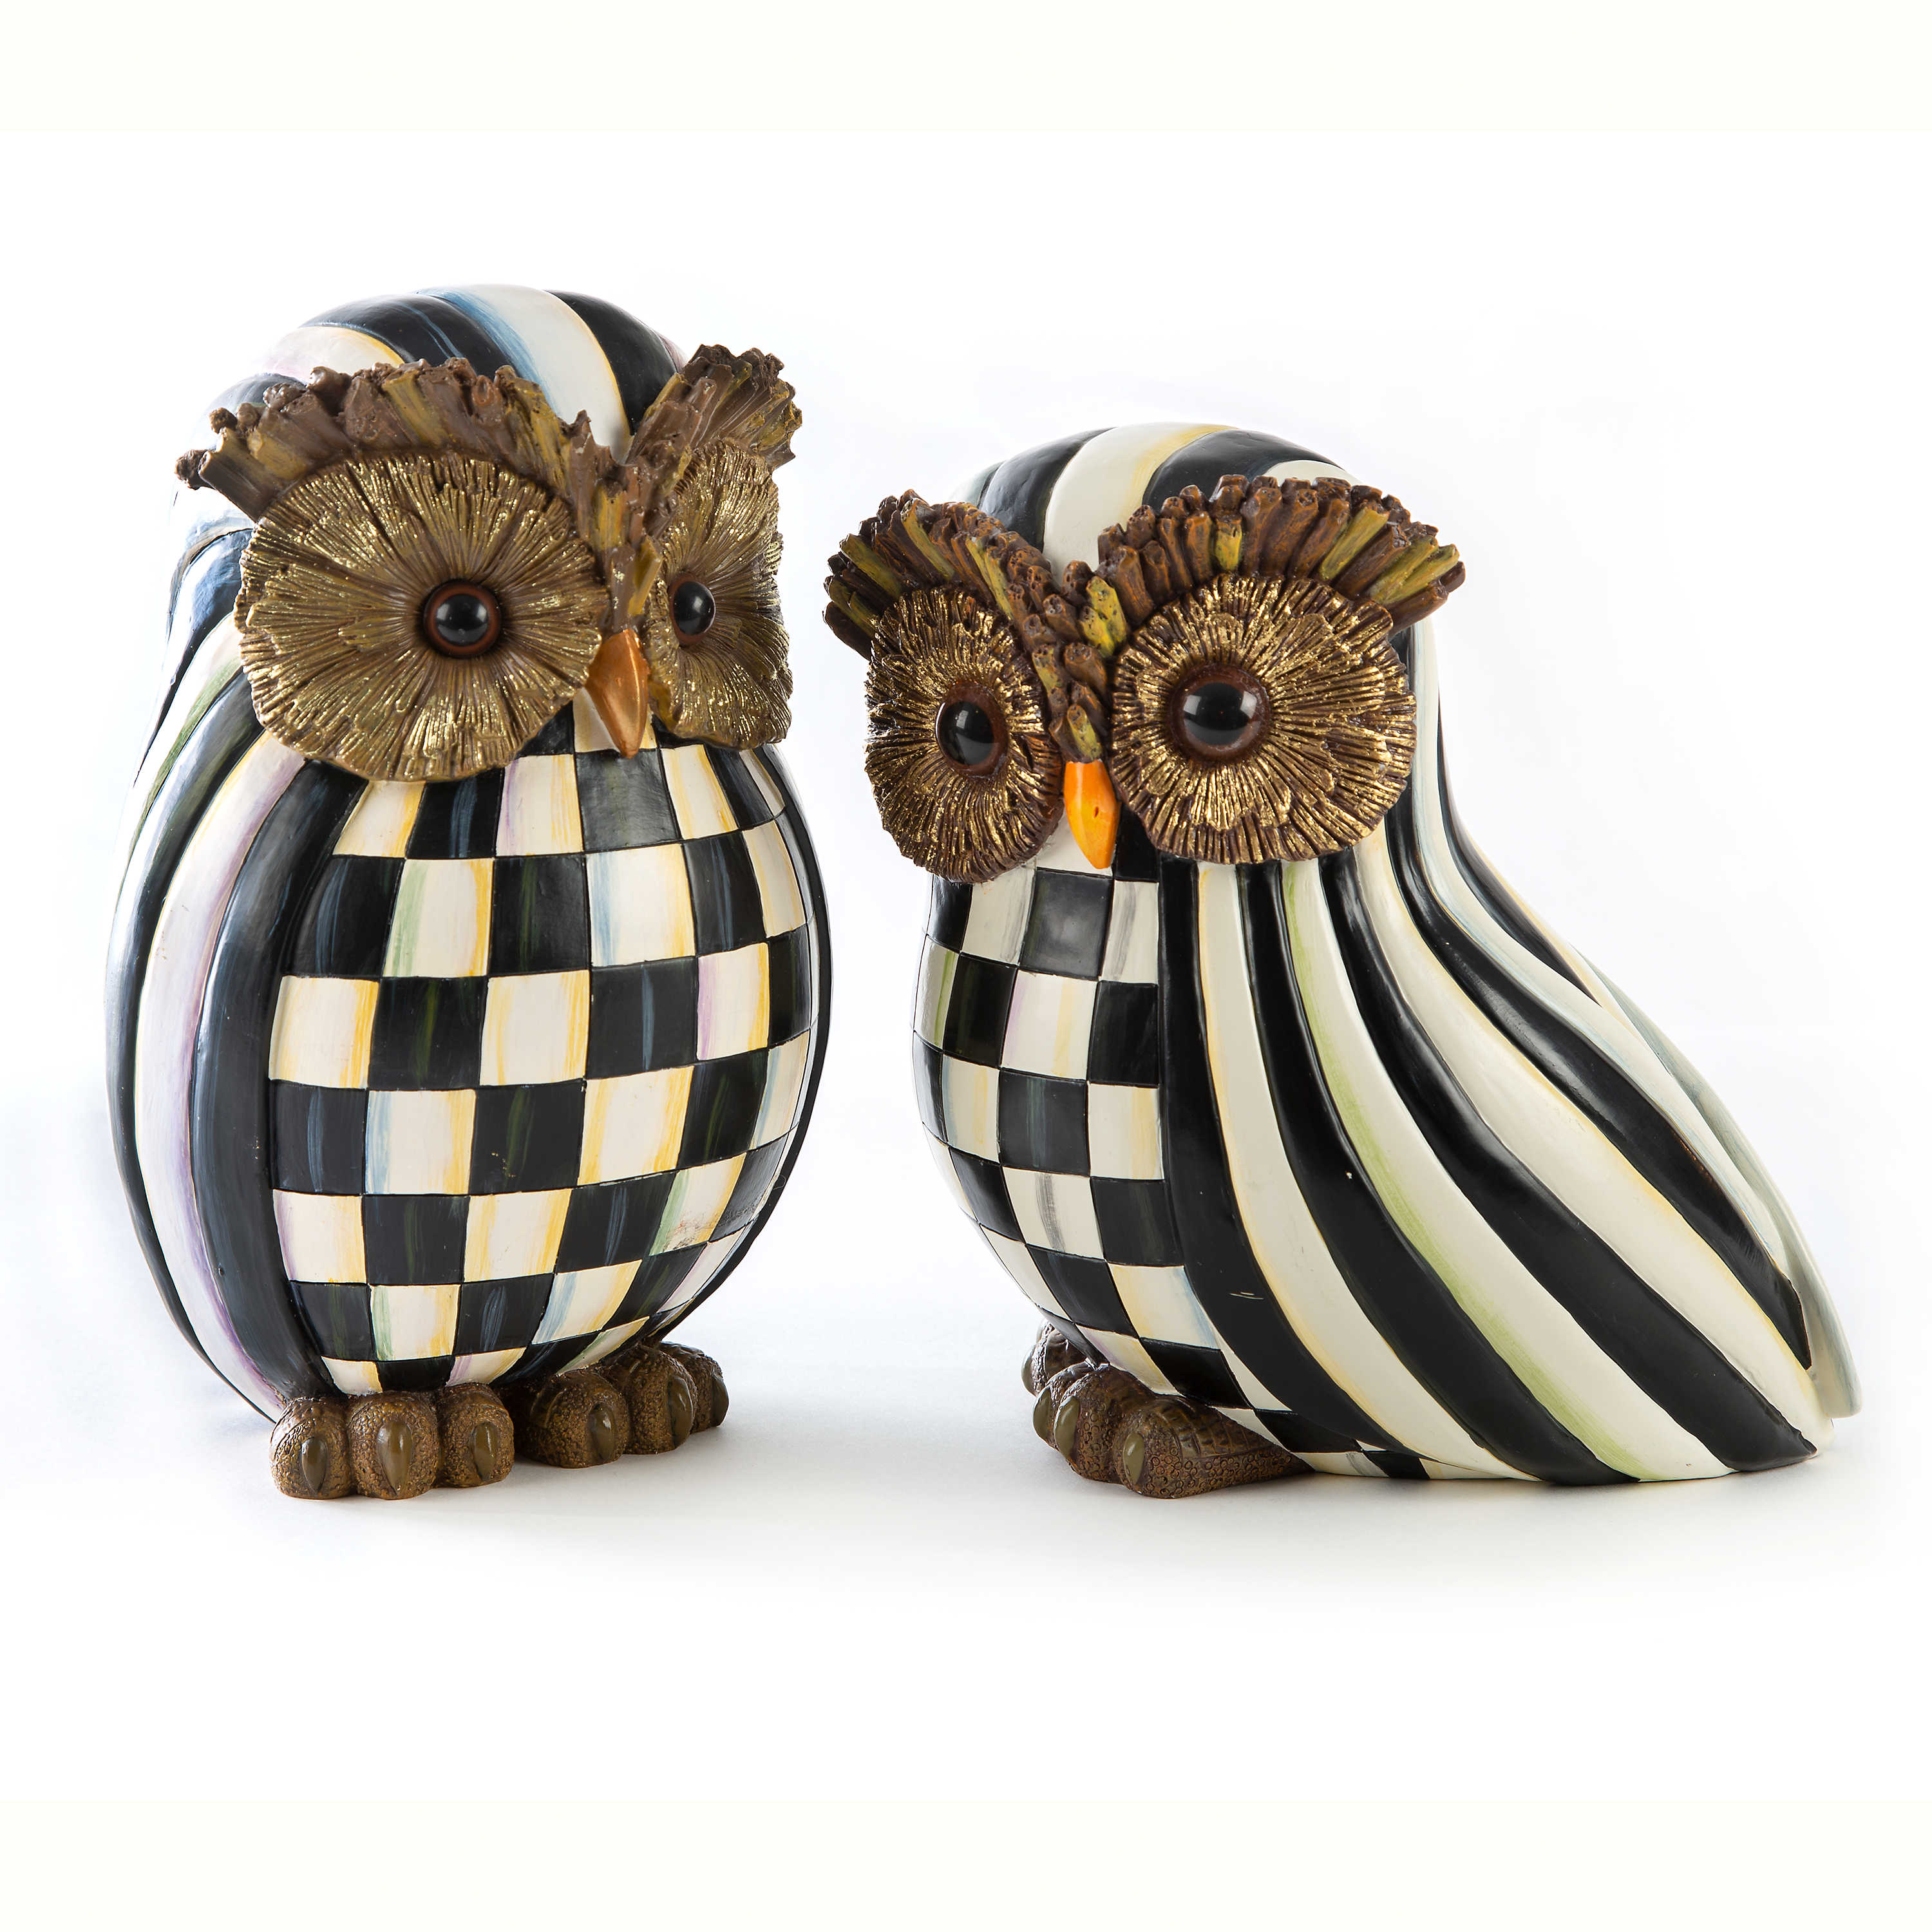 Courtly Check & Courtly Stripe Owl Set mackenzie-childs Panama 0